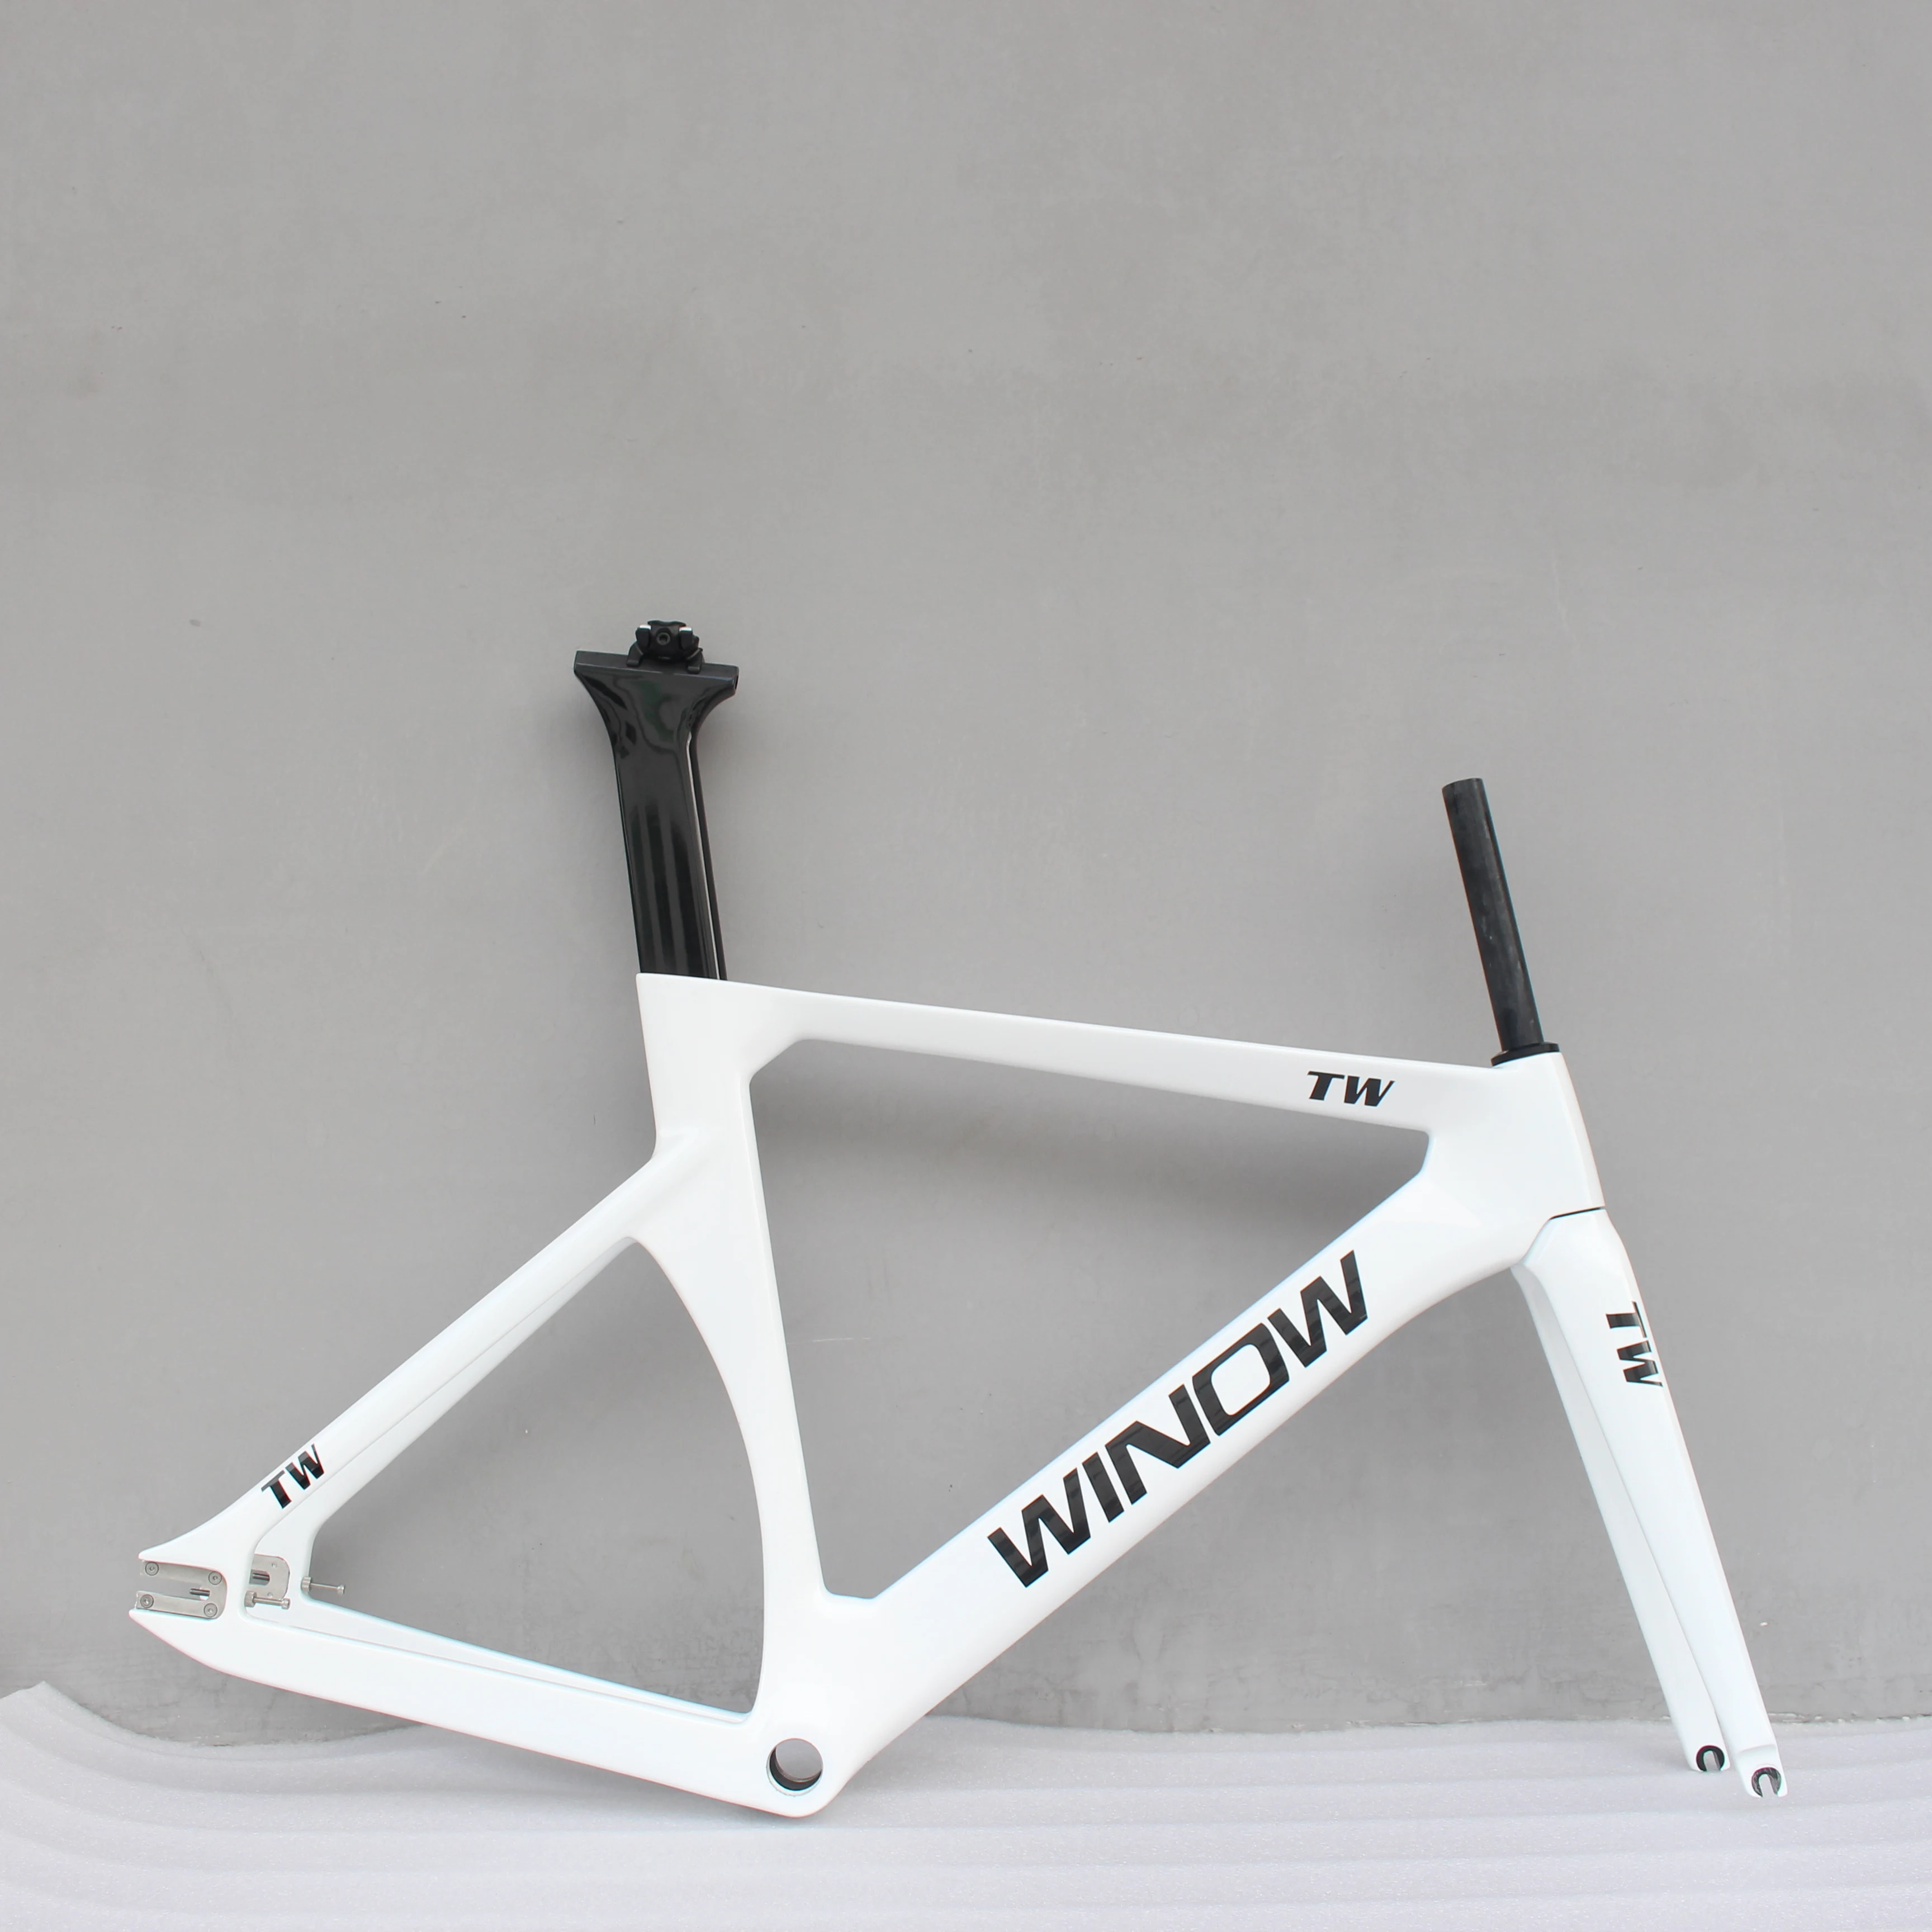 57cm bike frame size